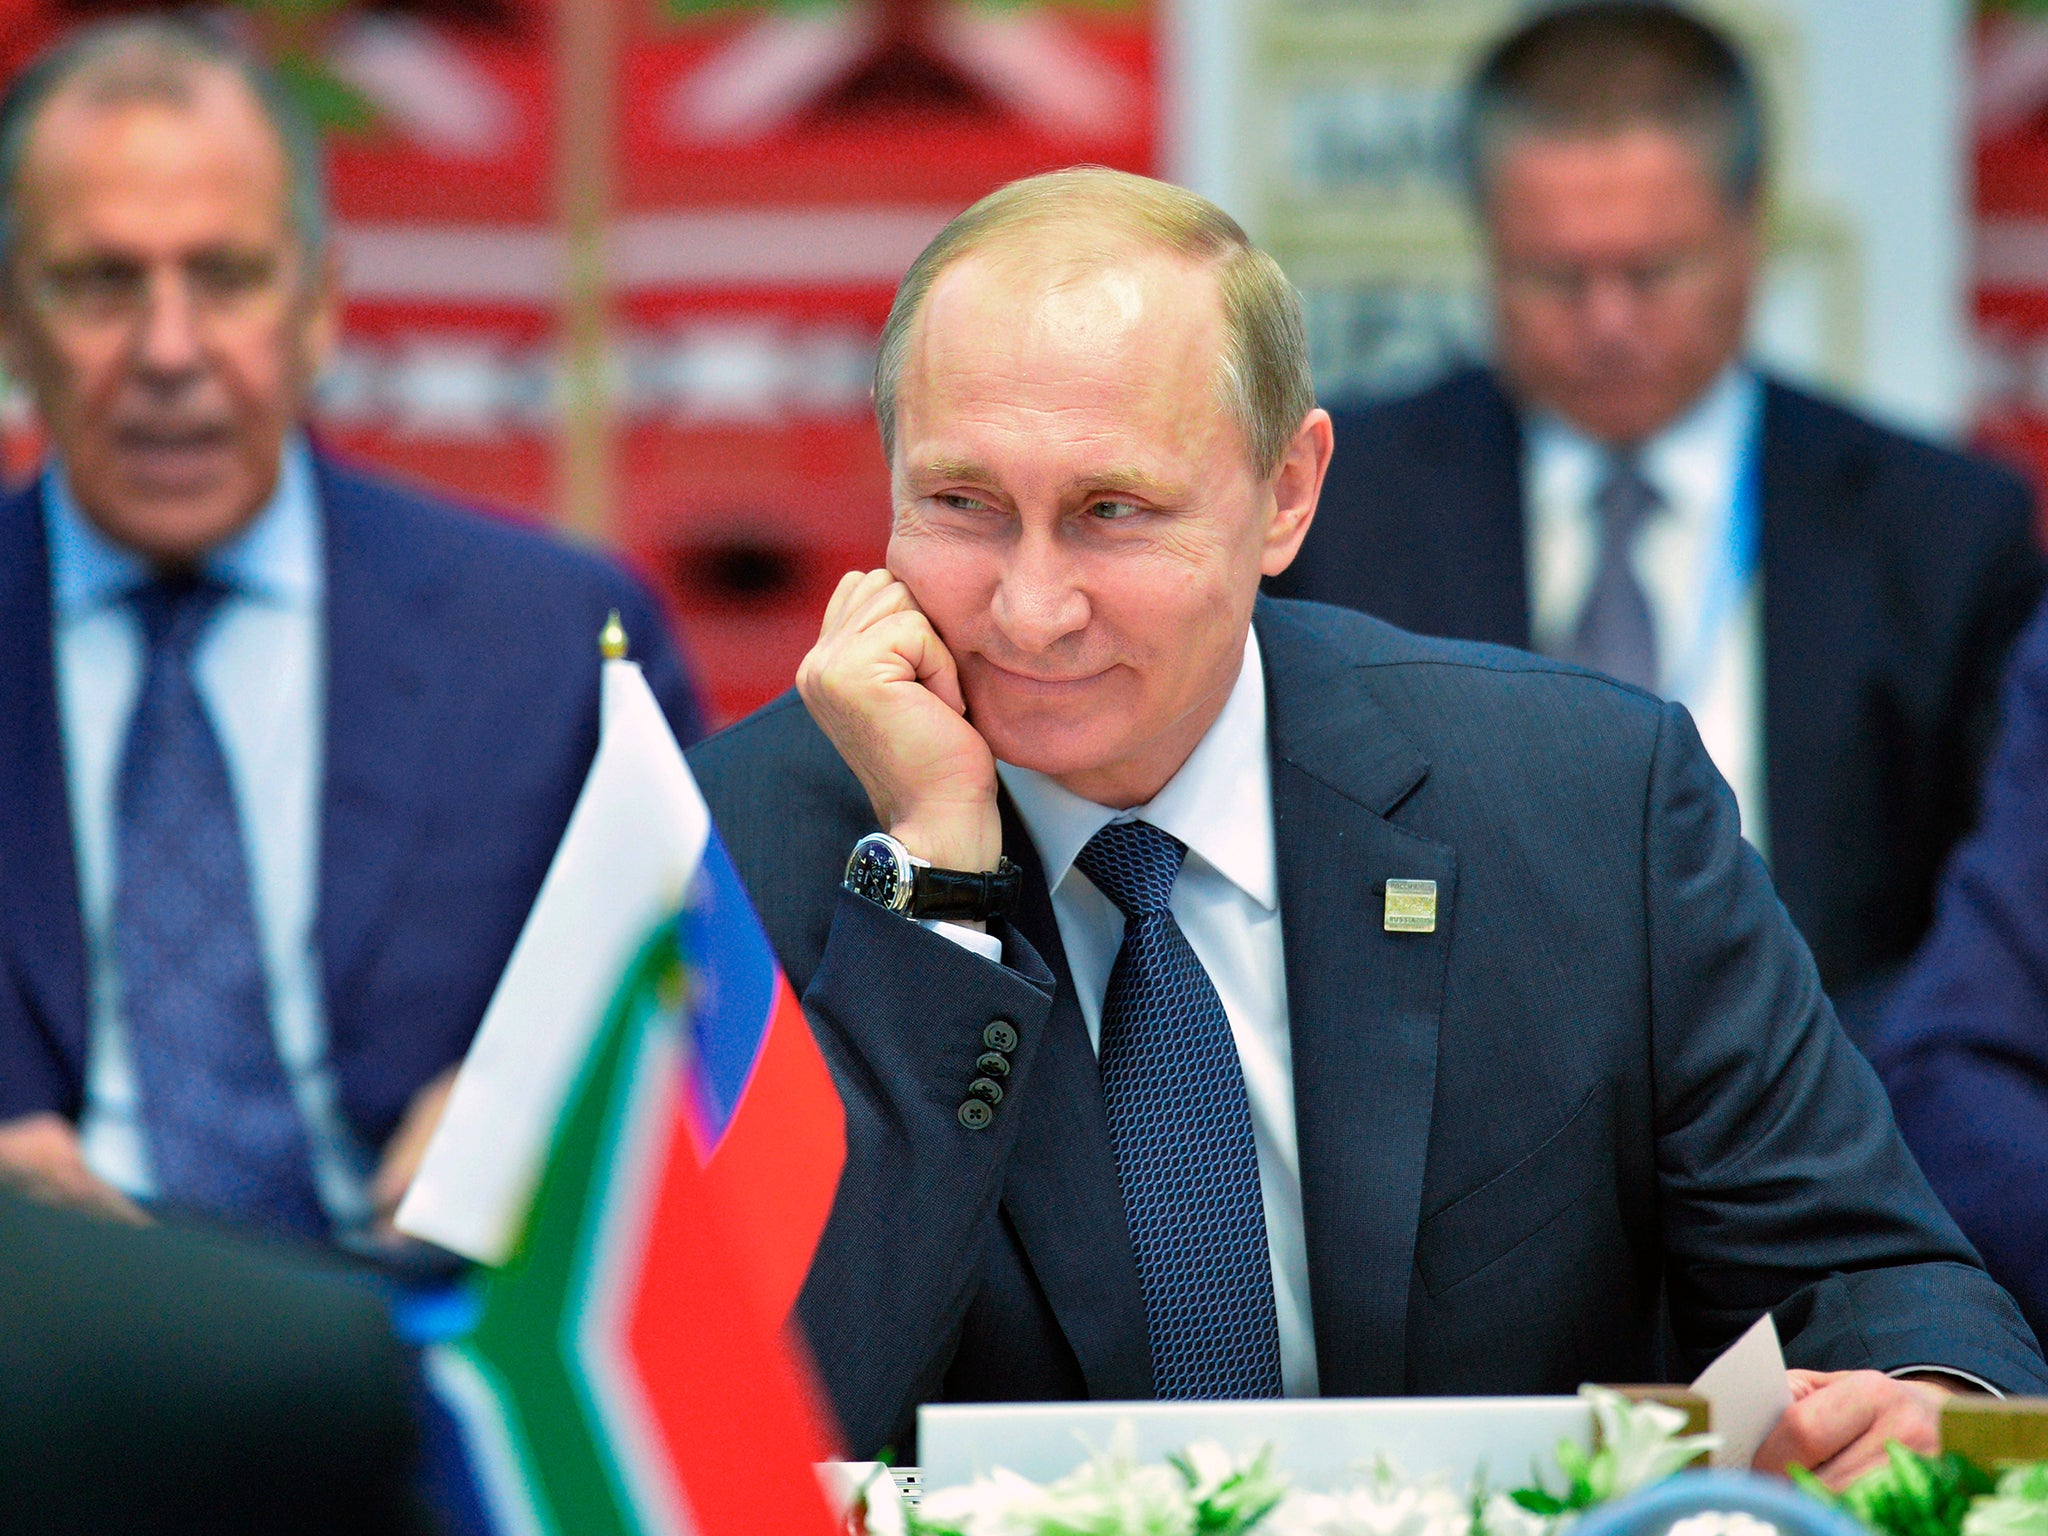 Russian President Vladimir Putin smiles during BRICS (Brazil, Russia, India, China, South Africa) summit in Ufa, Russia